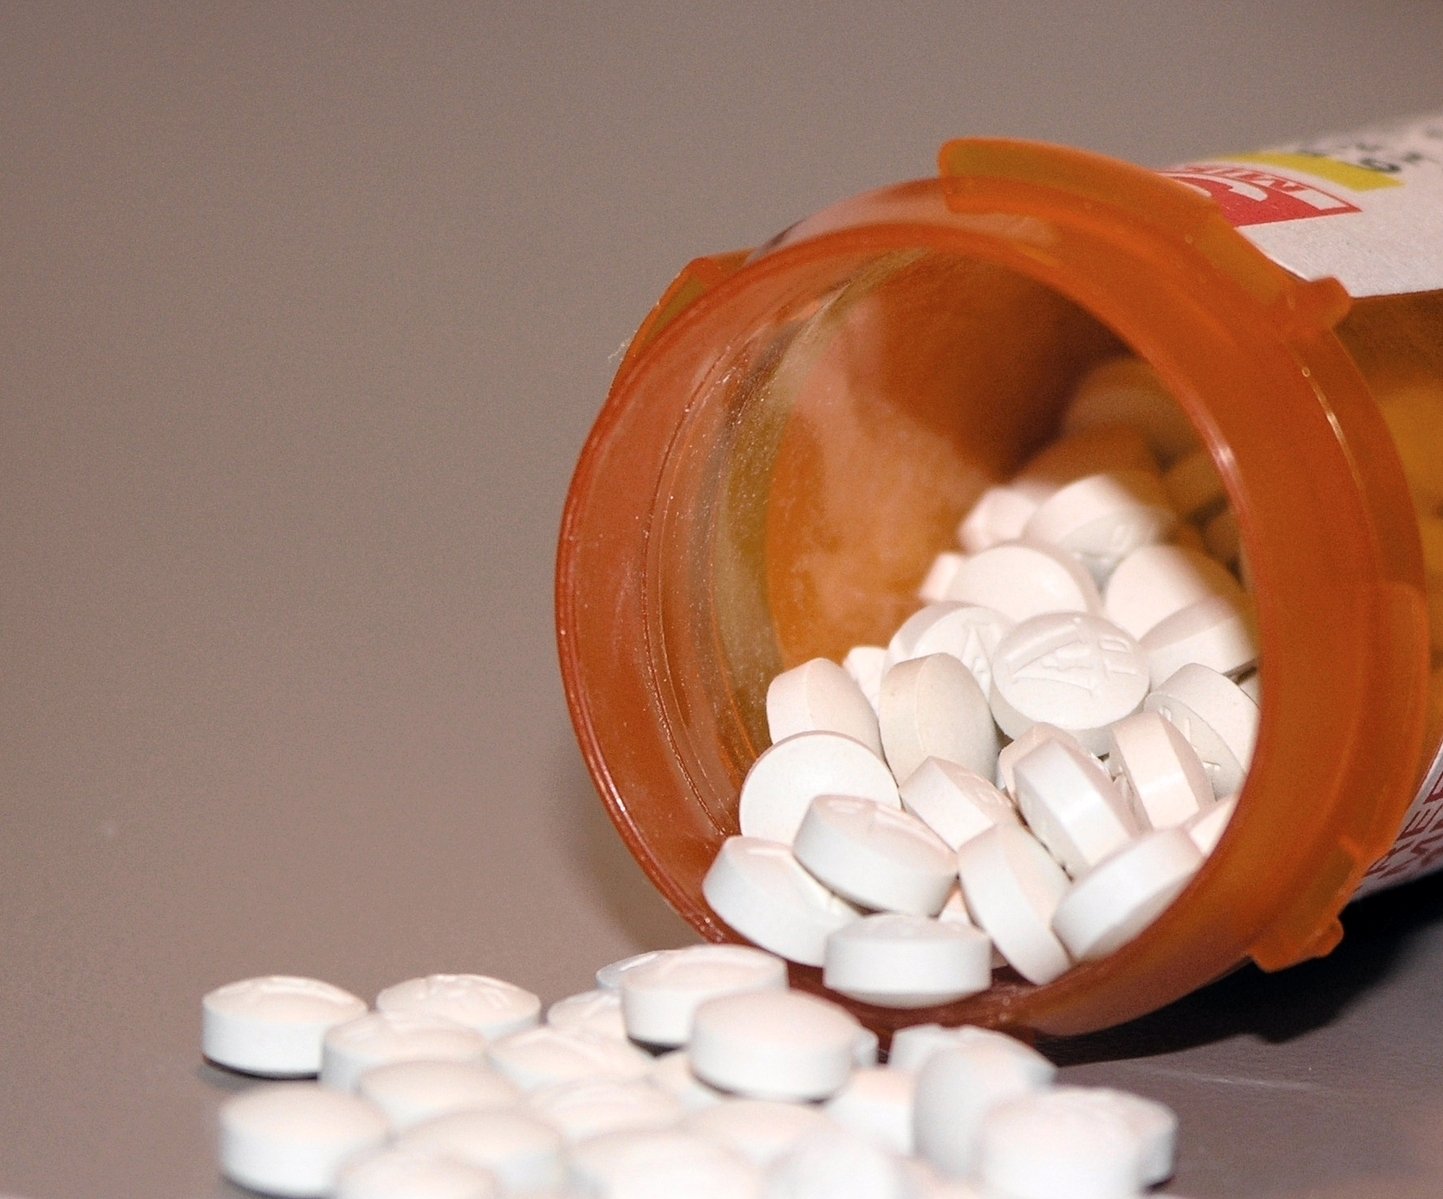 pills coming out of an open prescription bottle